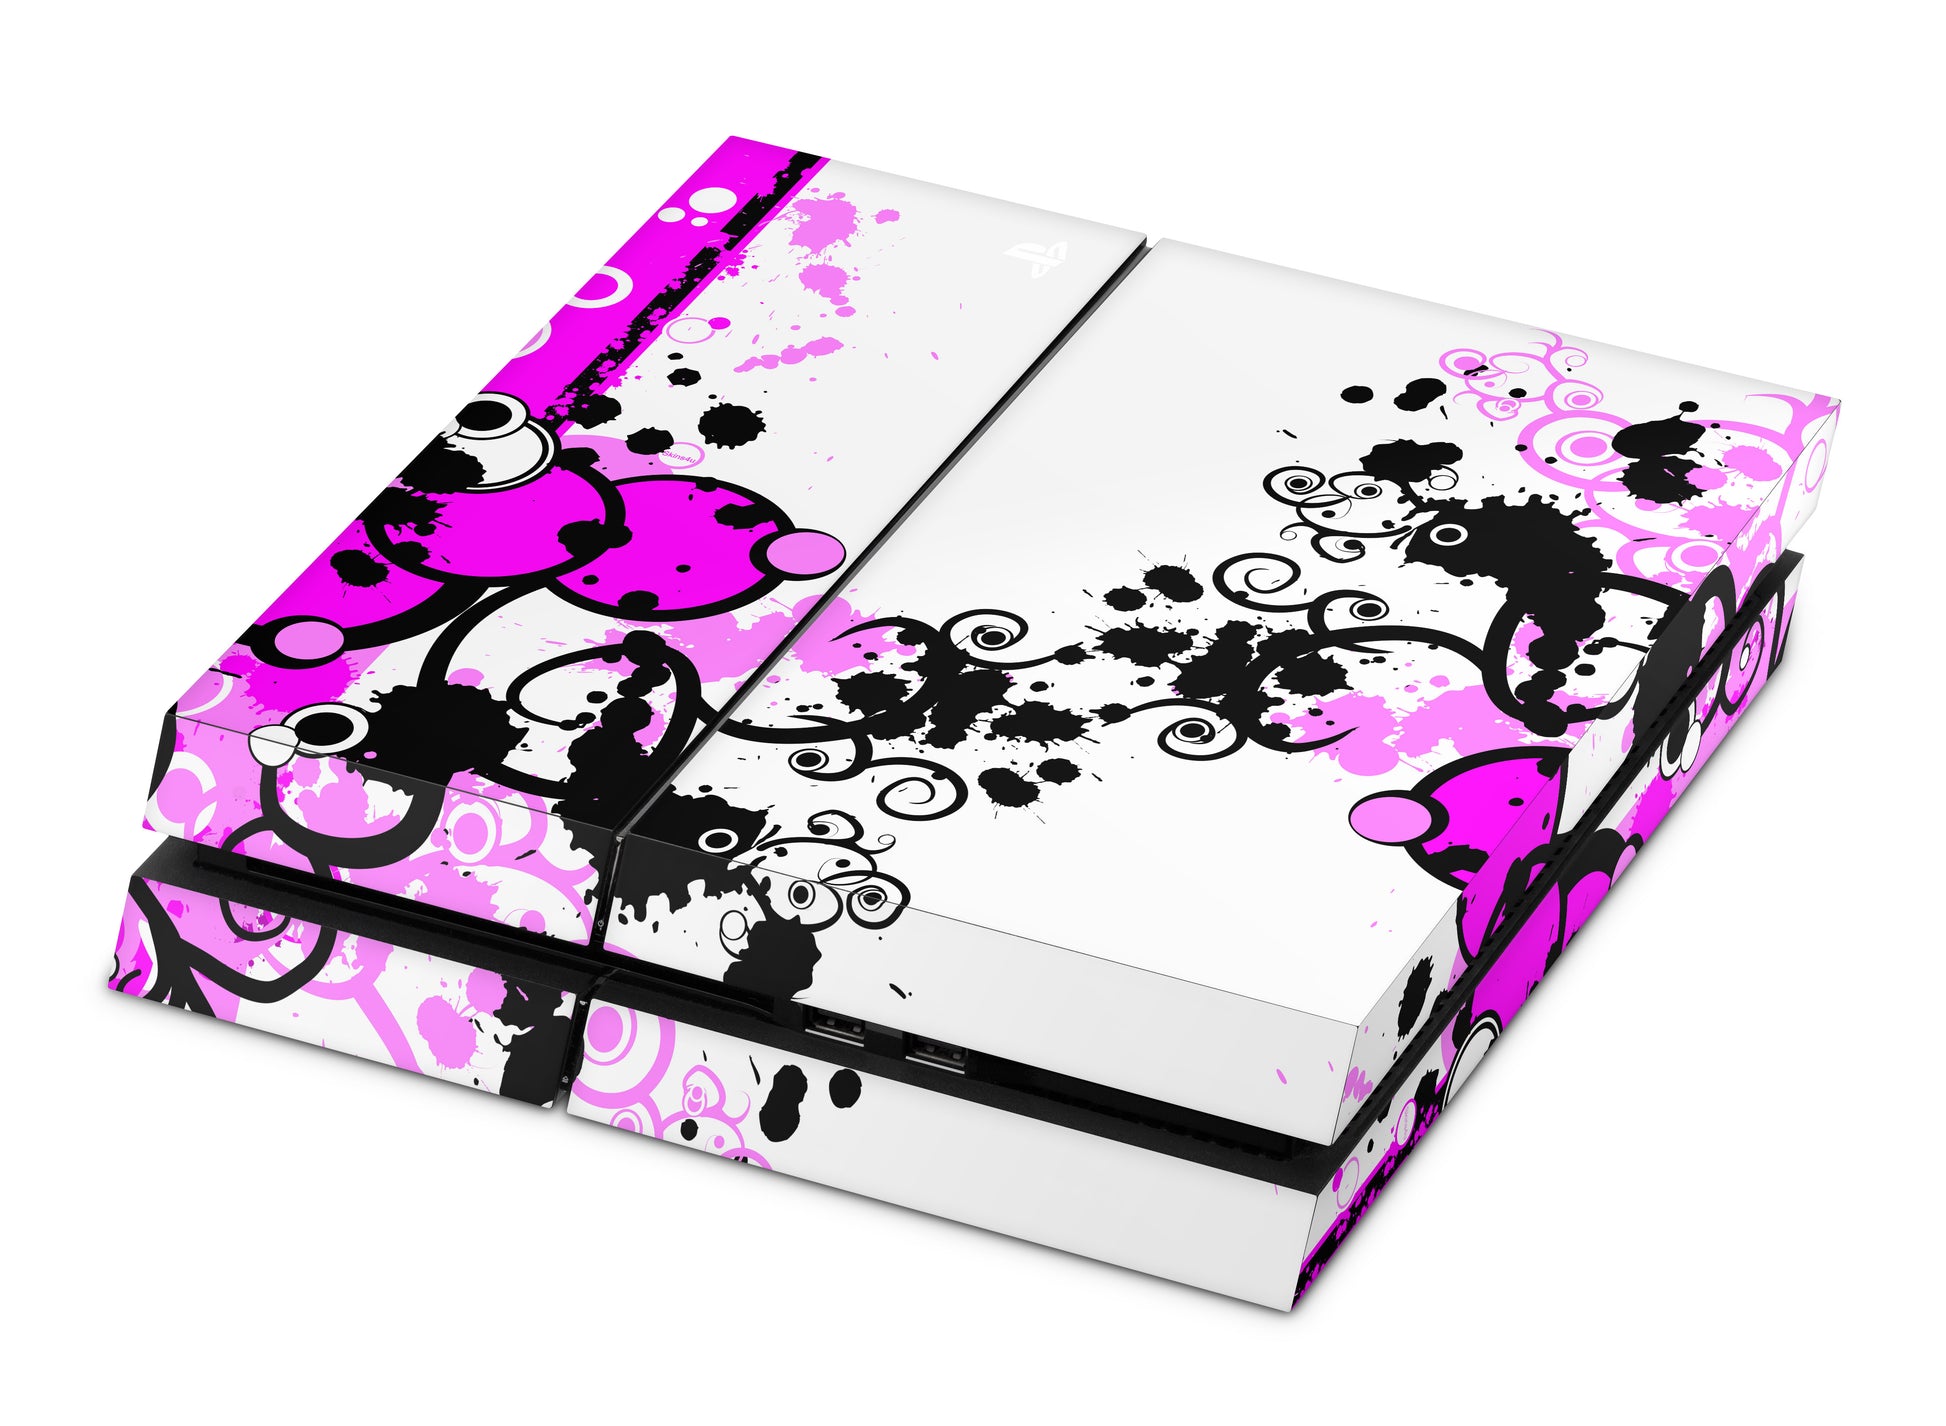 Playstation 4 Skin & Wrap Design Aufkleber Folie für PS4 Konsole 1.Generation simply pink Aufkleber skins4u   